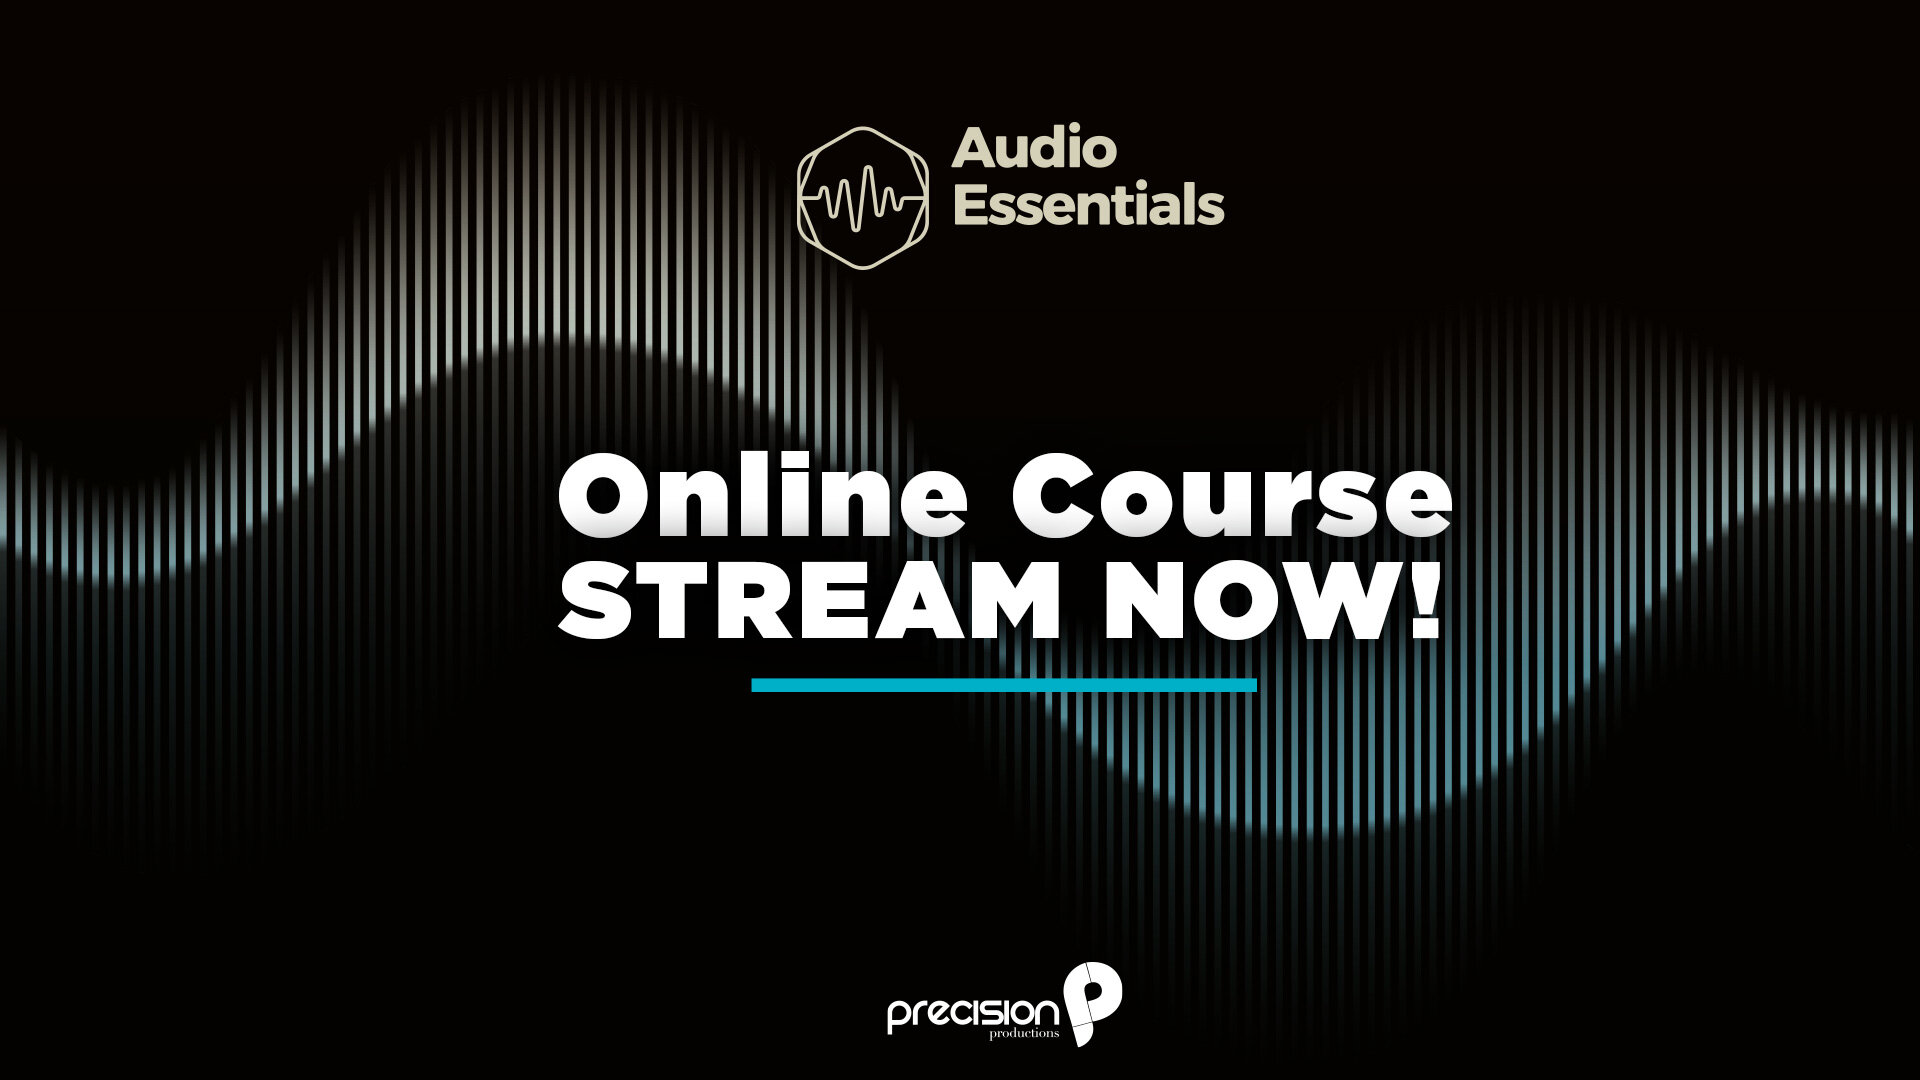 Audio Essentials Online Course!